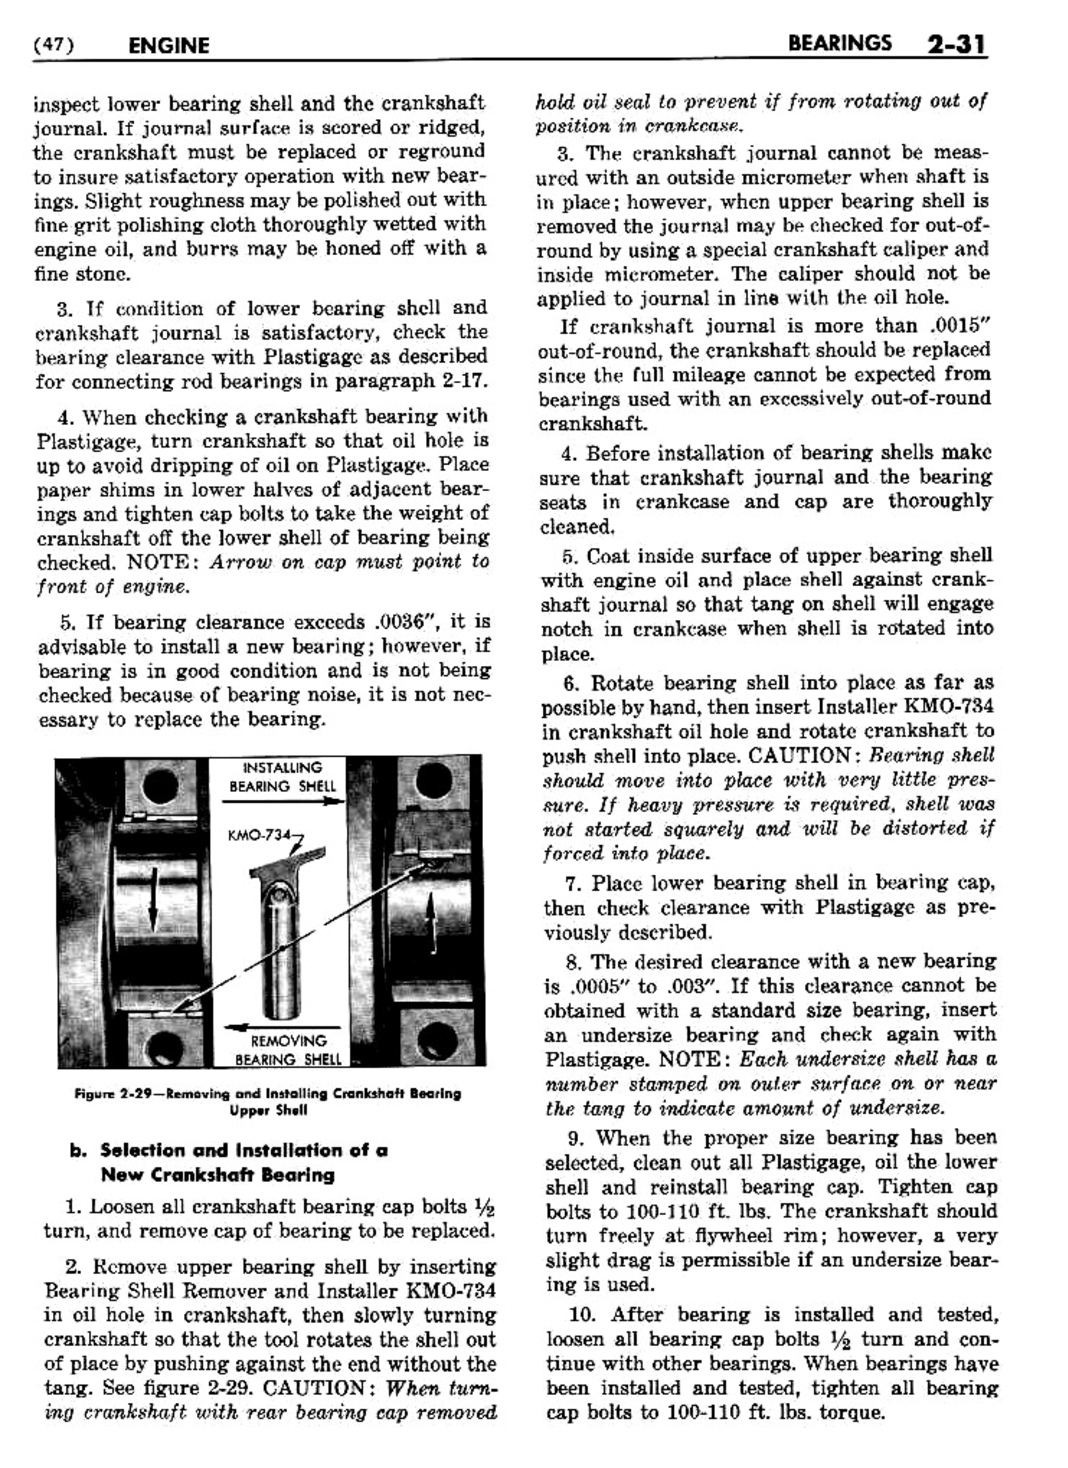 n_03 1954 Buick Shop Manual - Engine-031-031.jpg